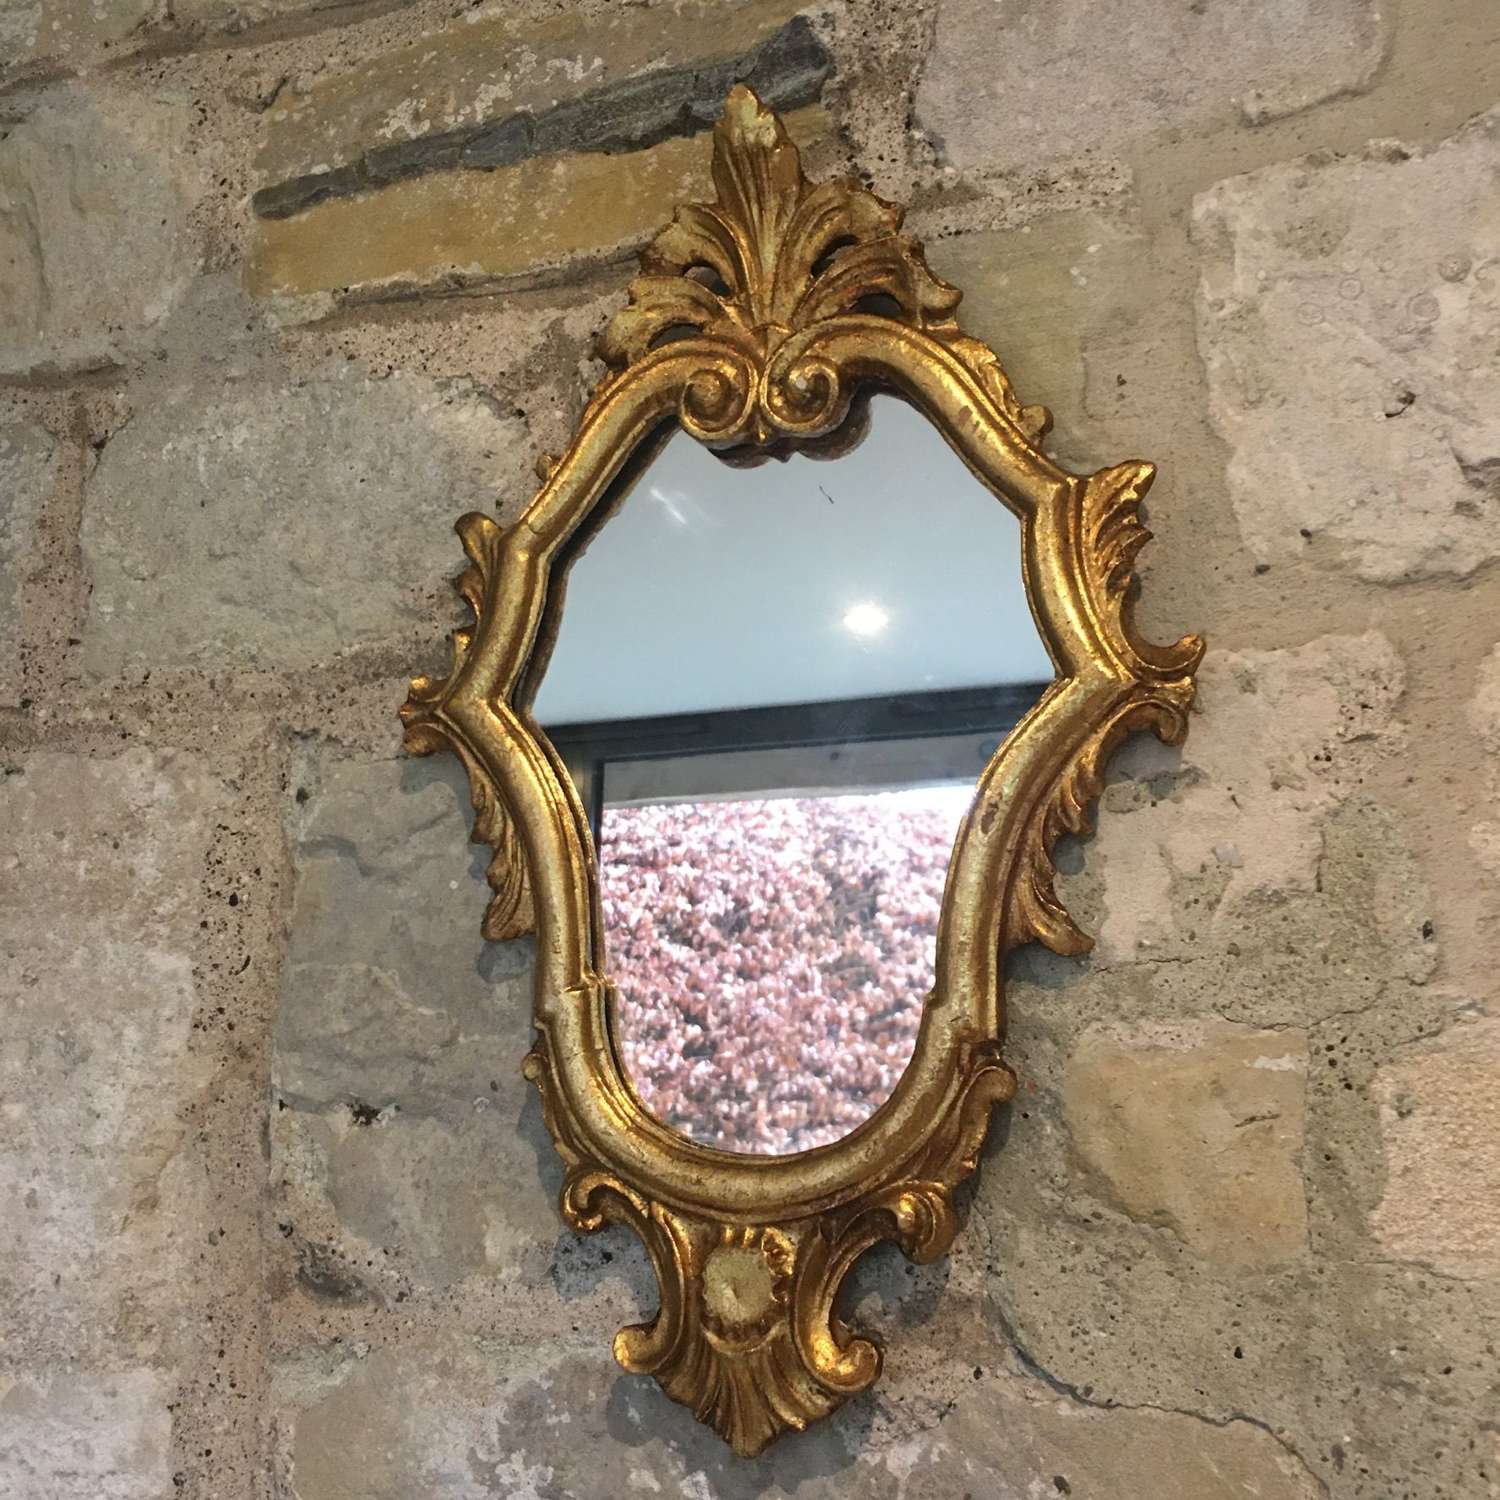 Antique Florentine mirror in good condition